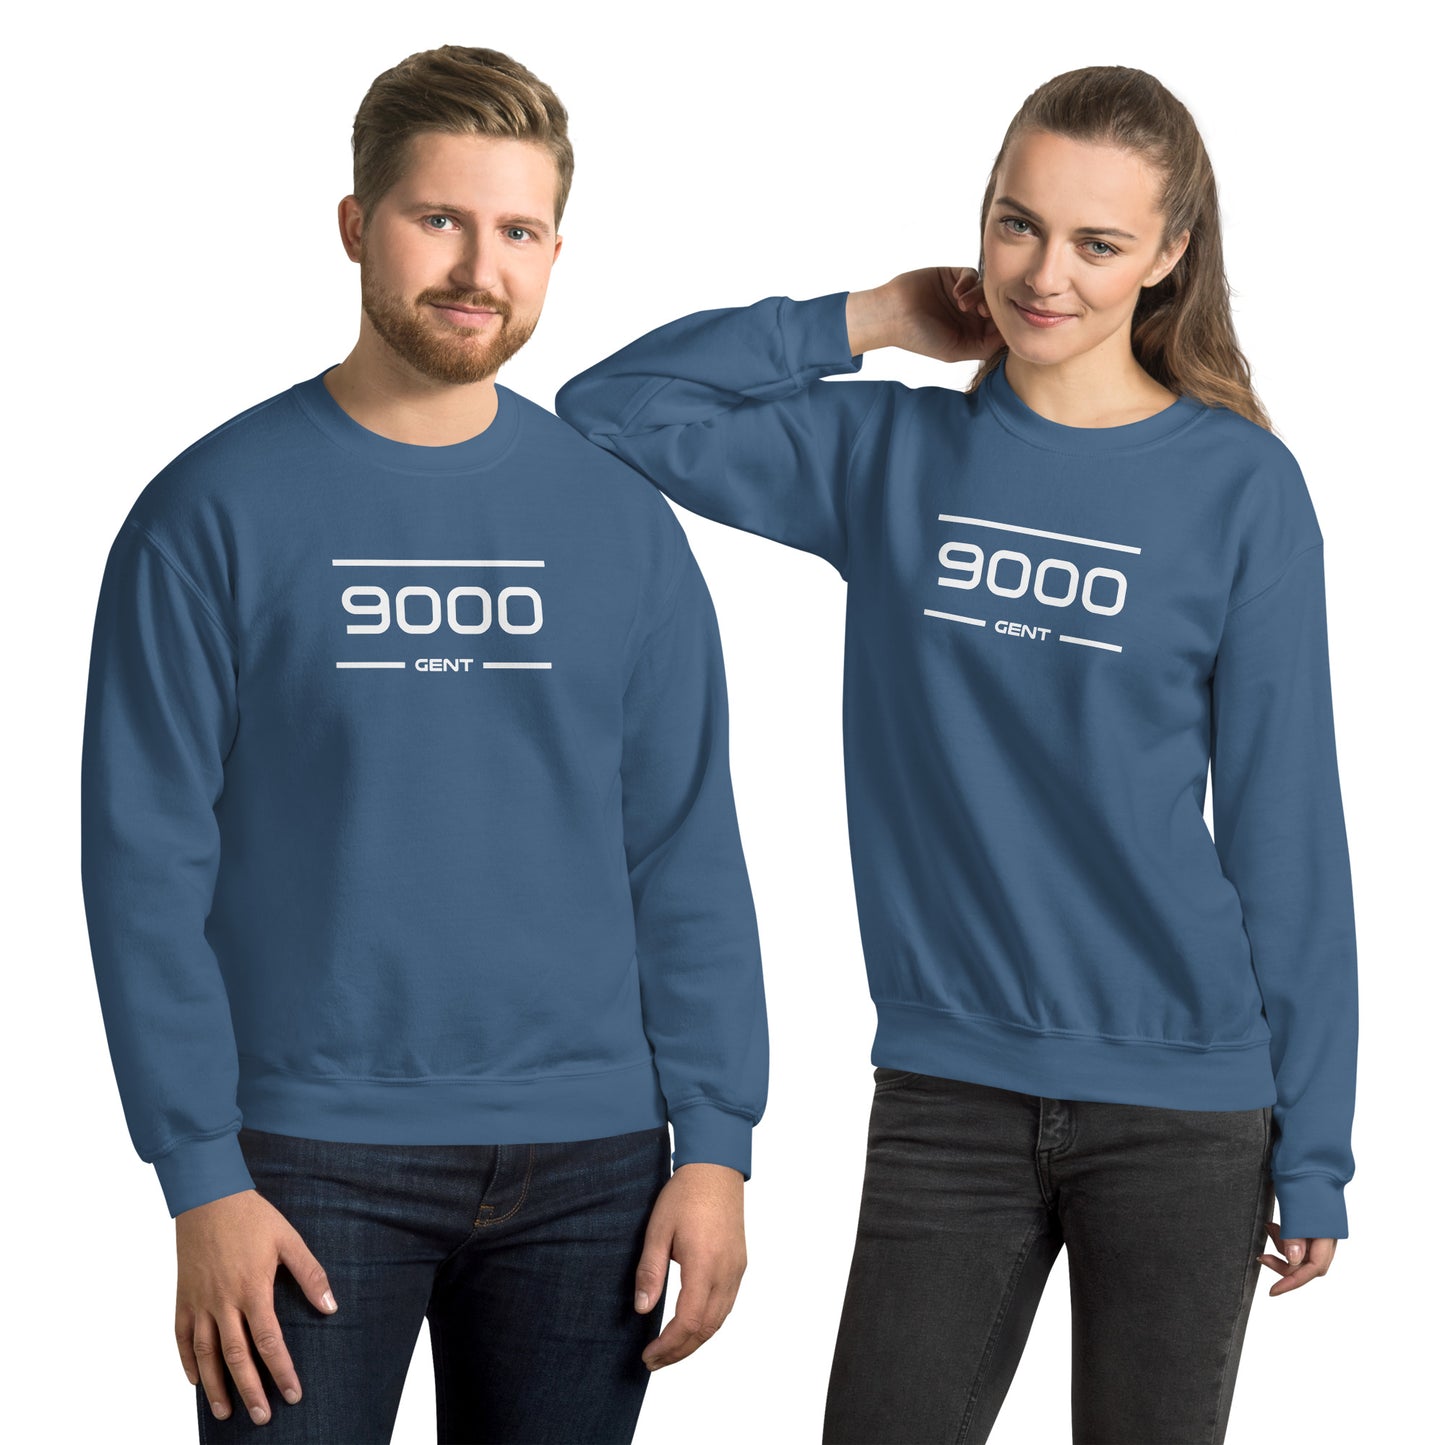 Sweater - 9000 - Gent